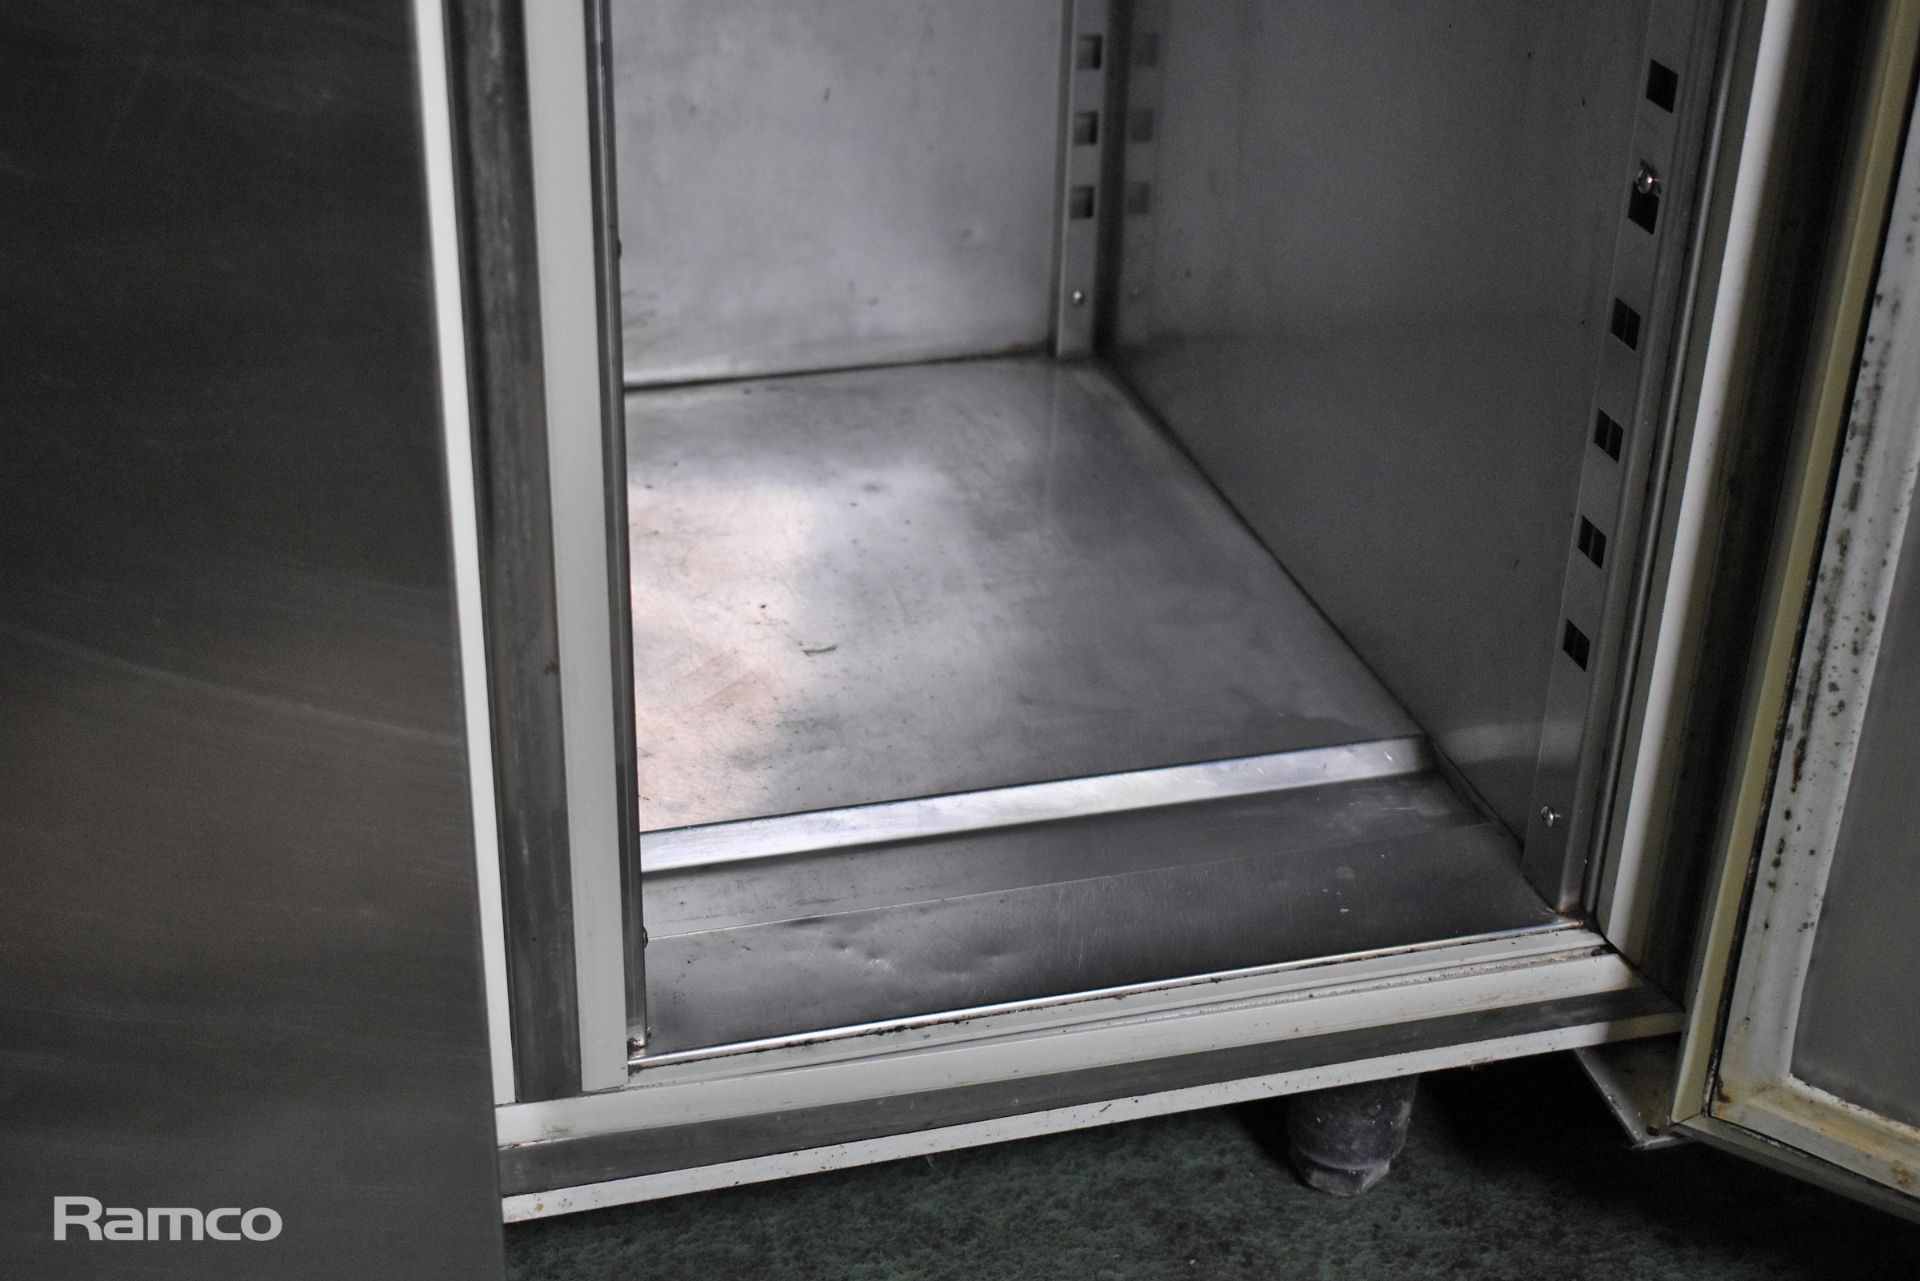 Blizzard stainless steel double door counter fridge - W 1560 x D 700 x H 860mm - Image 4 of 7